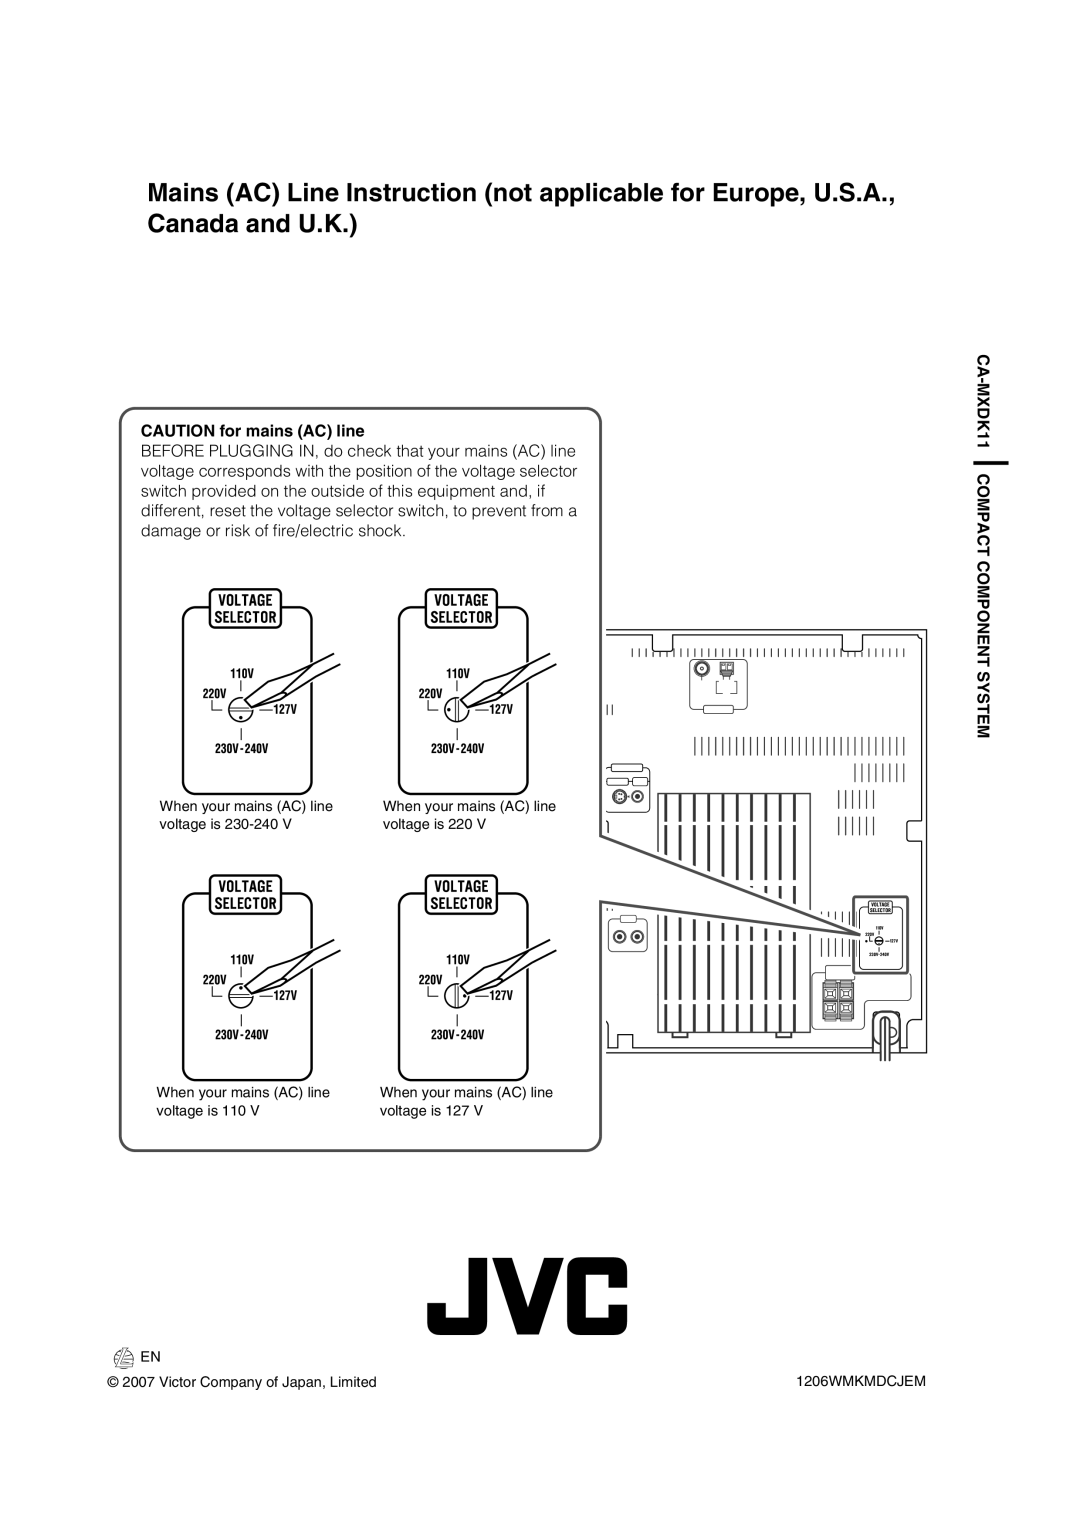 JVC CAUTION for mains AC line, CA-MXDK11COMPACT COMPONENT SYSTEM, When your mains AC line, voltage is, 1206WMKMDCJEM 